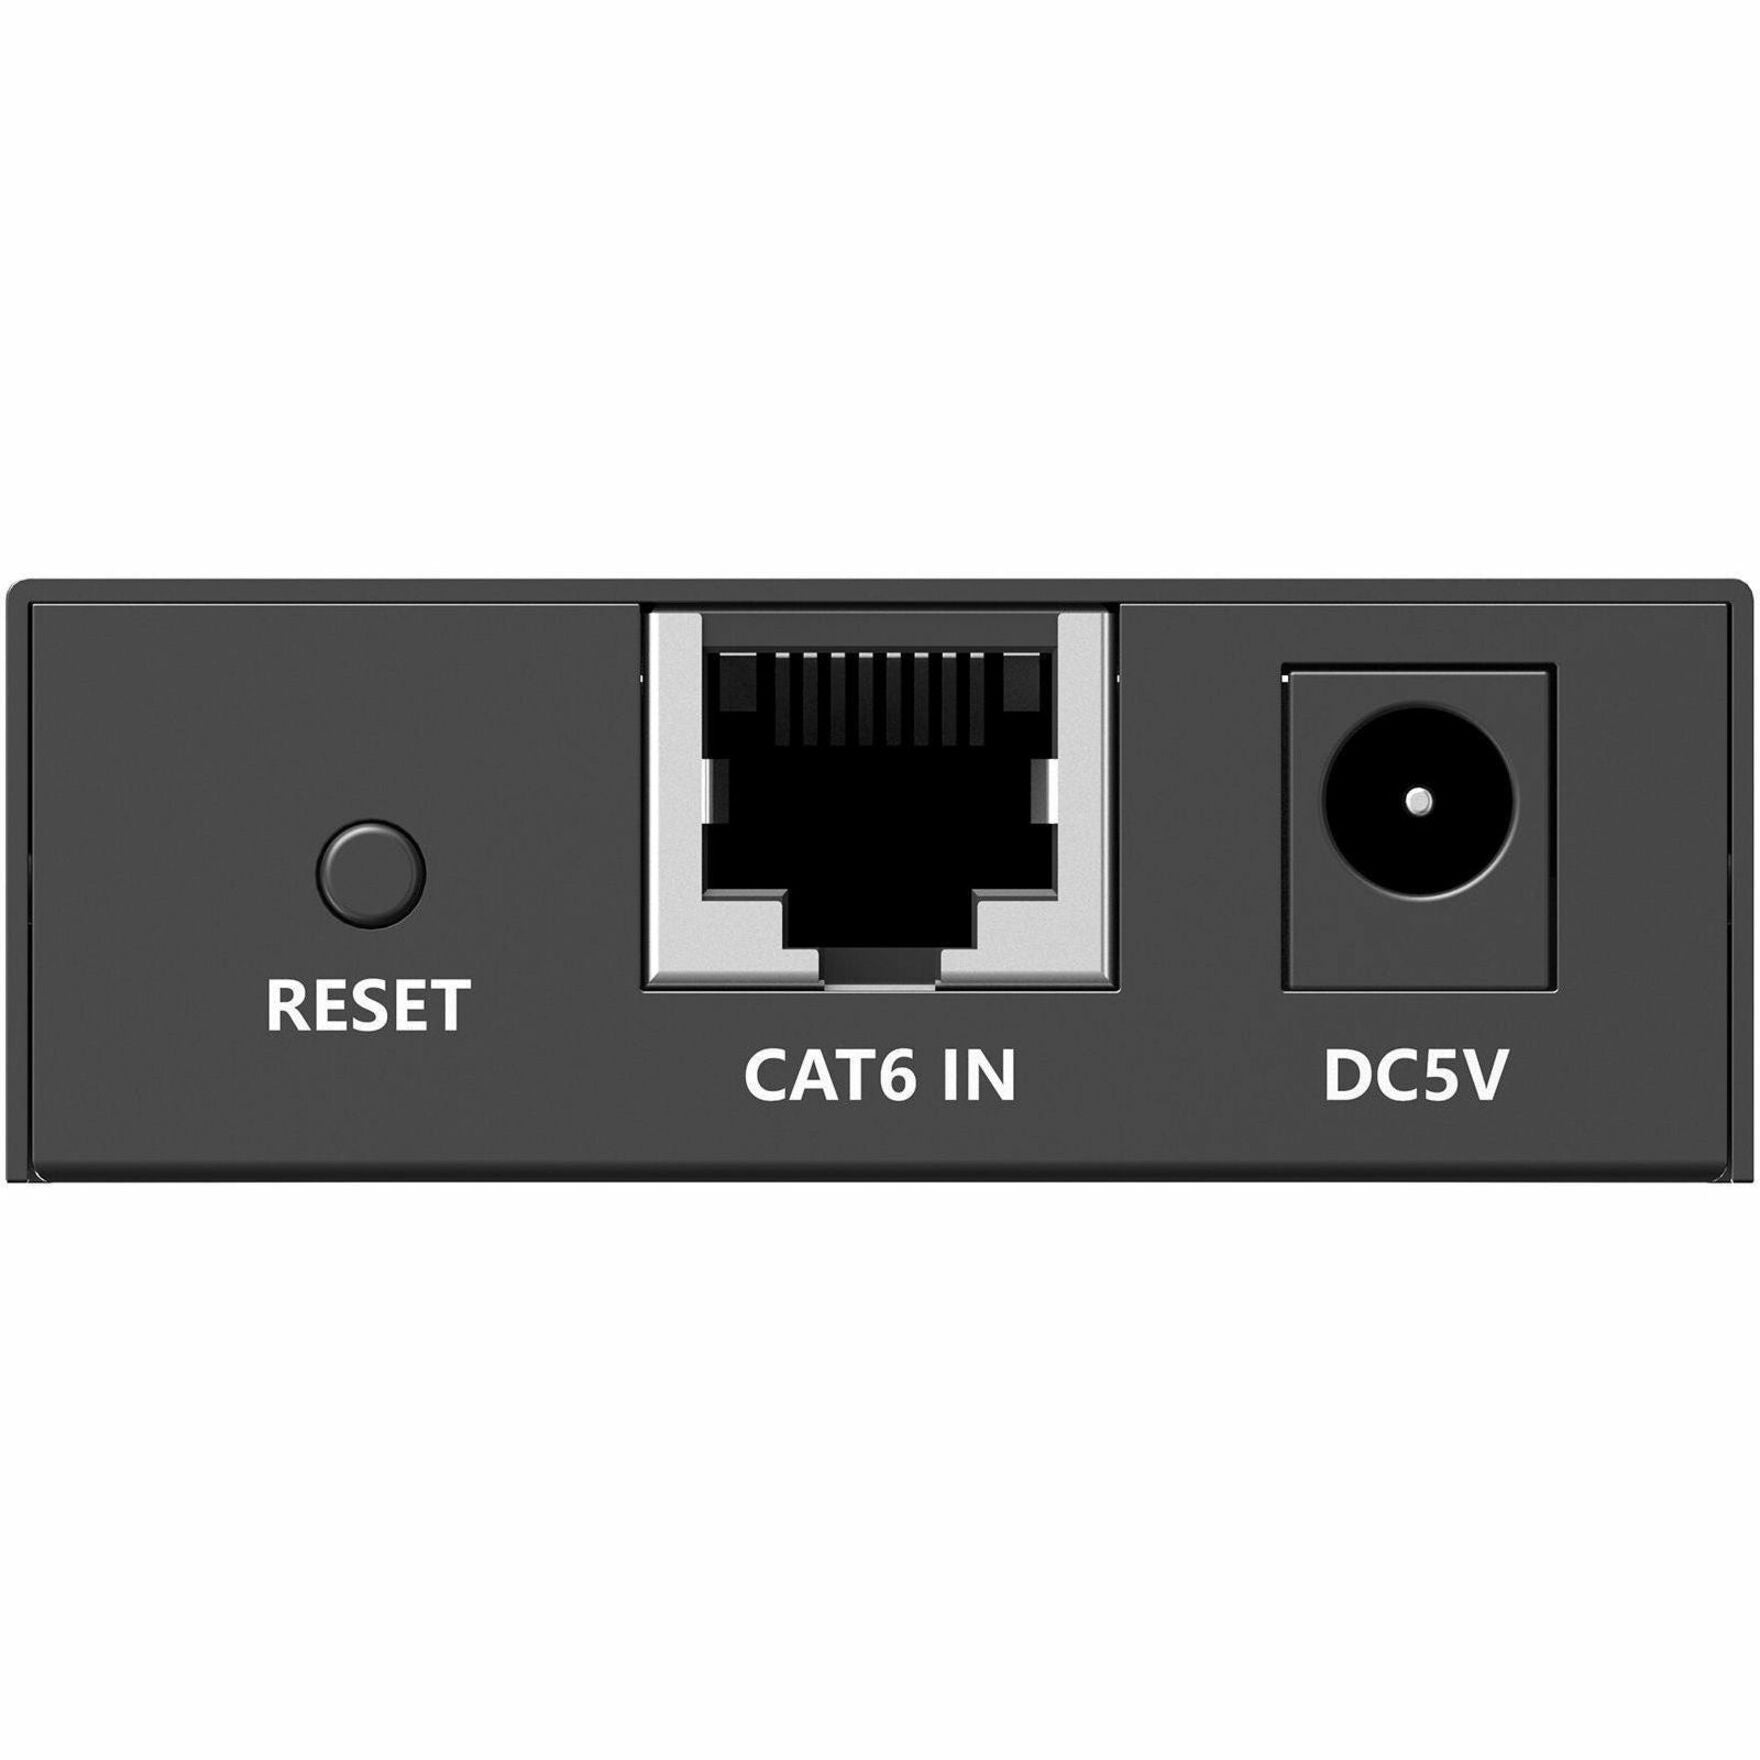 Rocstor Y10G004-B1 TrueReach 4 Port USB 2.0 Over Cat5/Cat6/Cat6a Extender Bus powered - Up to 492ft, USB Extender